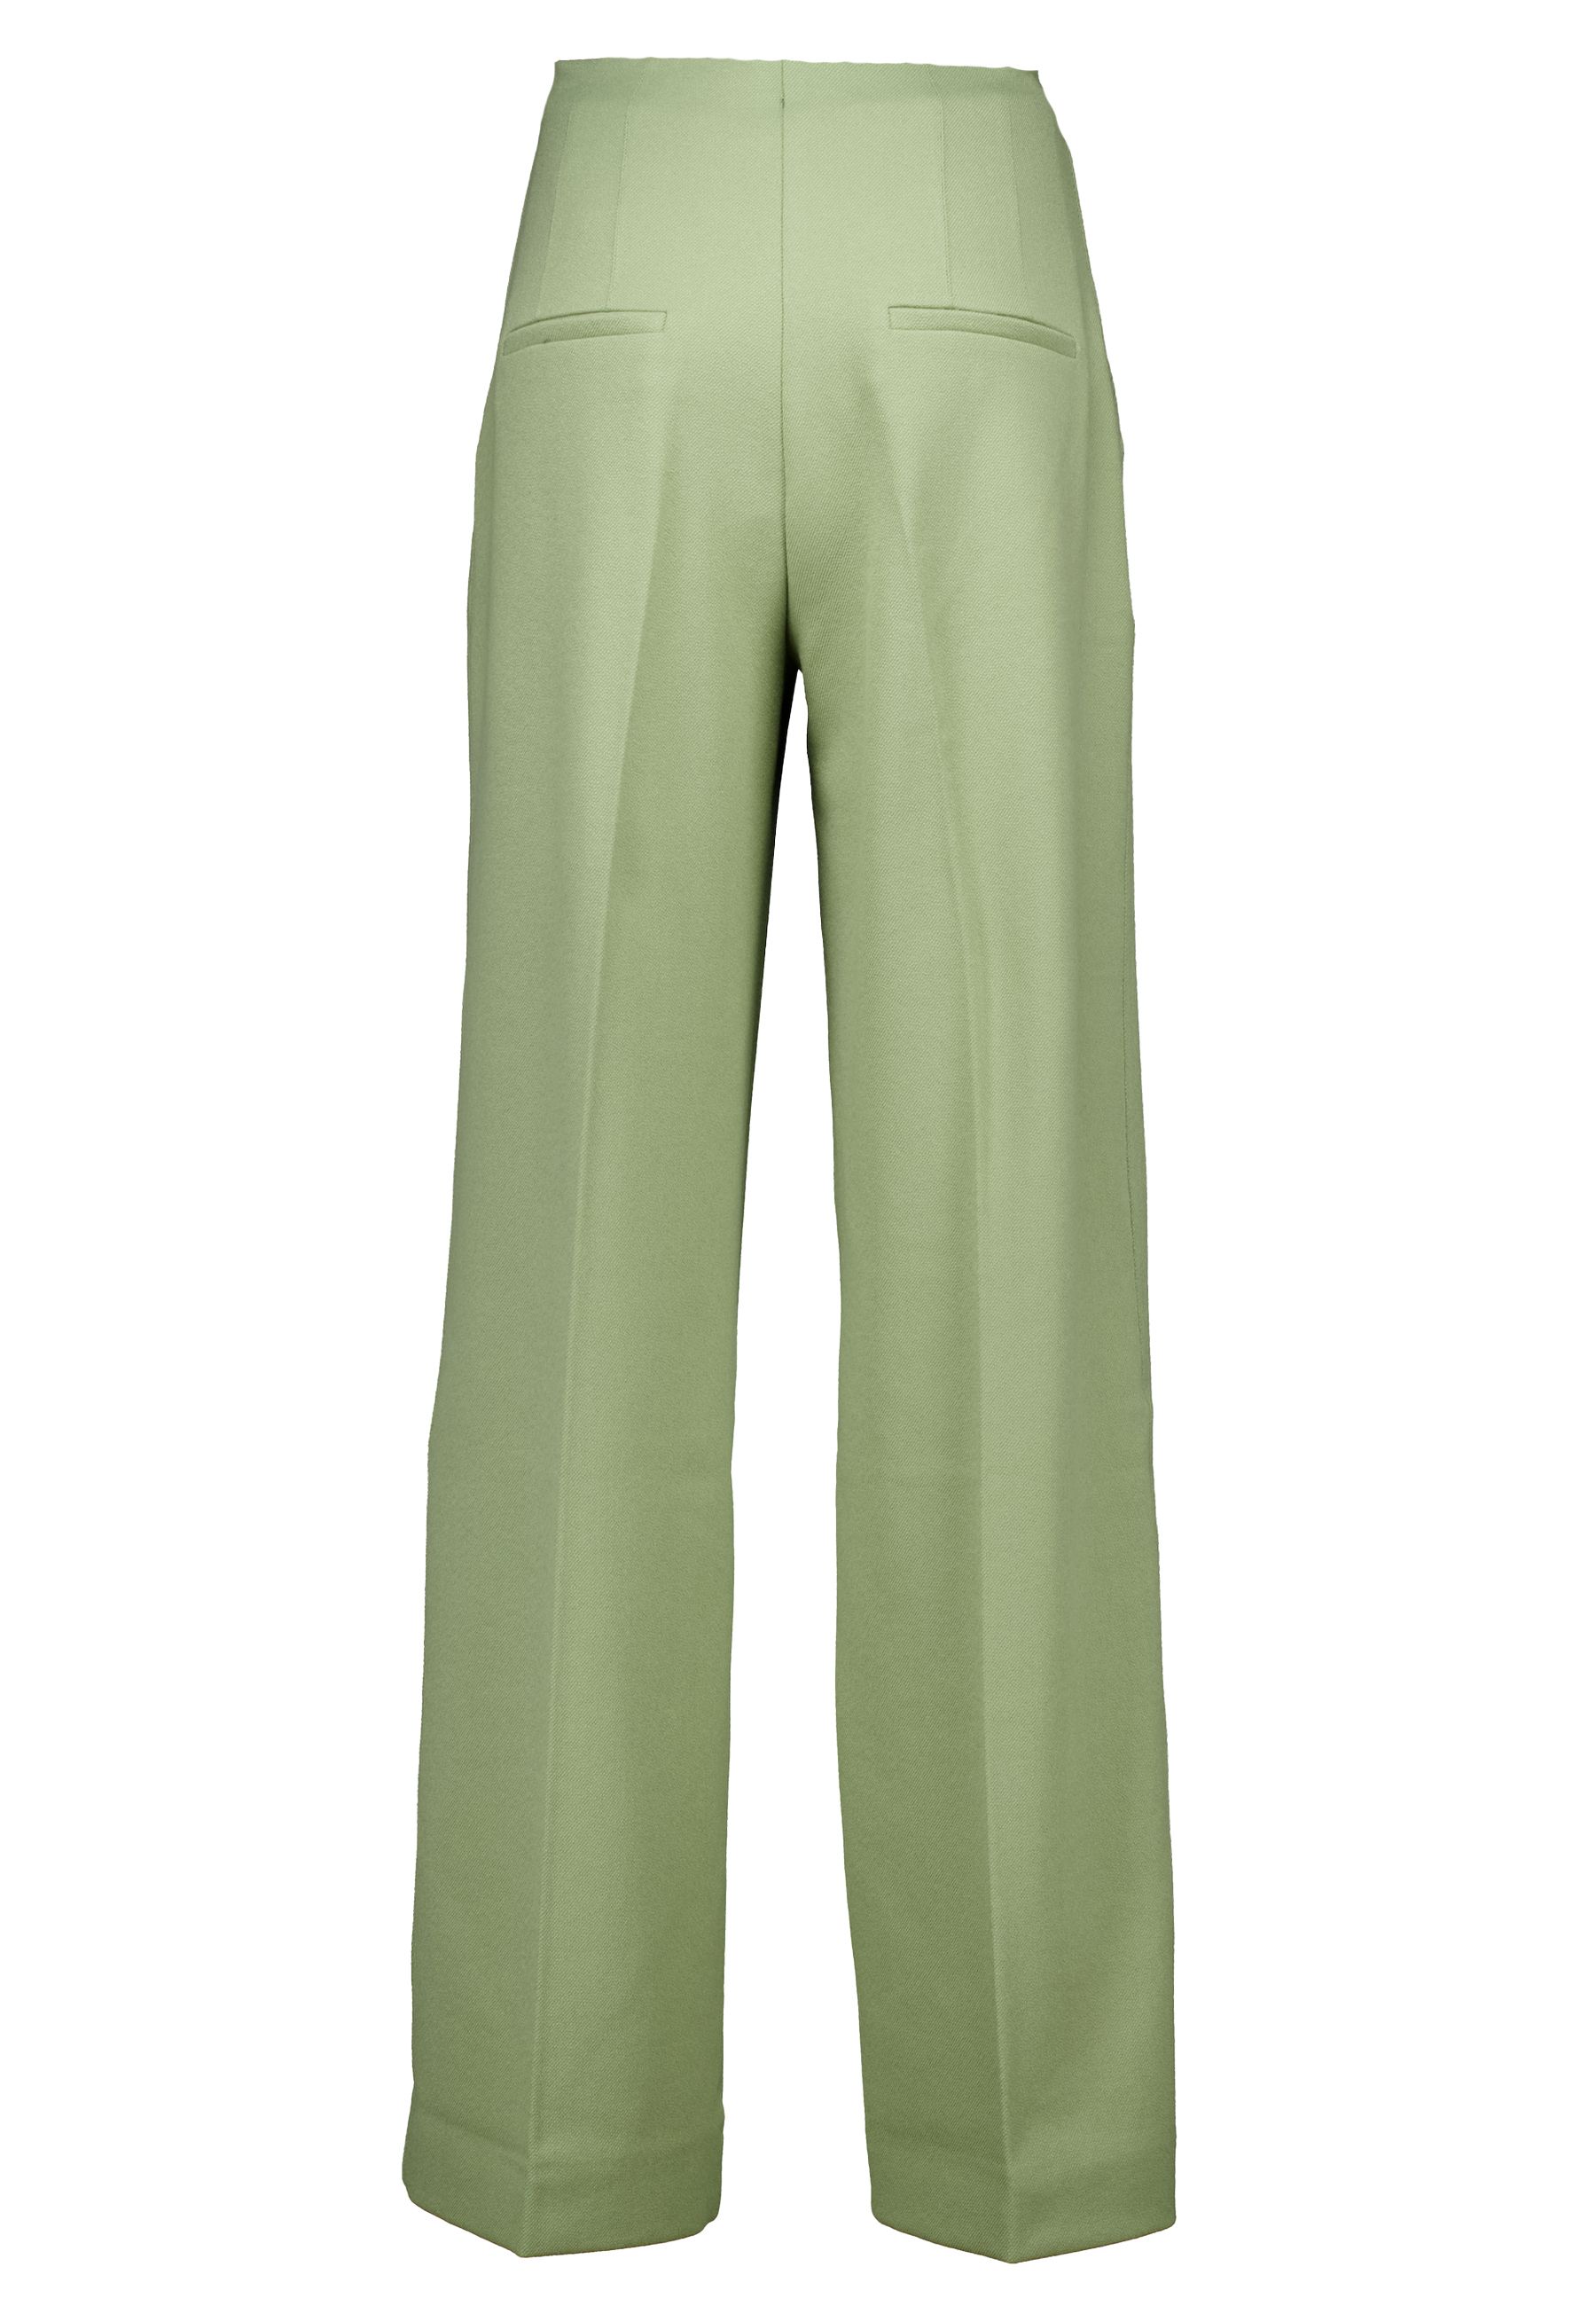 Fermission pantalons groen